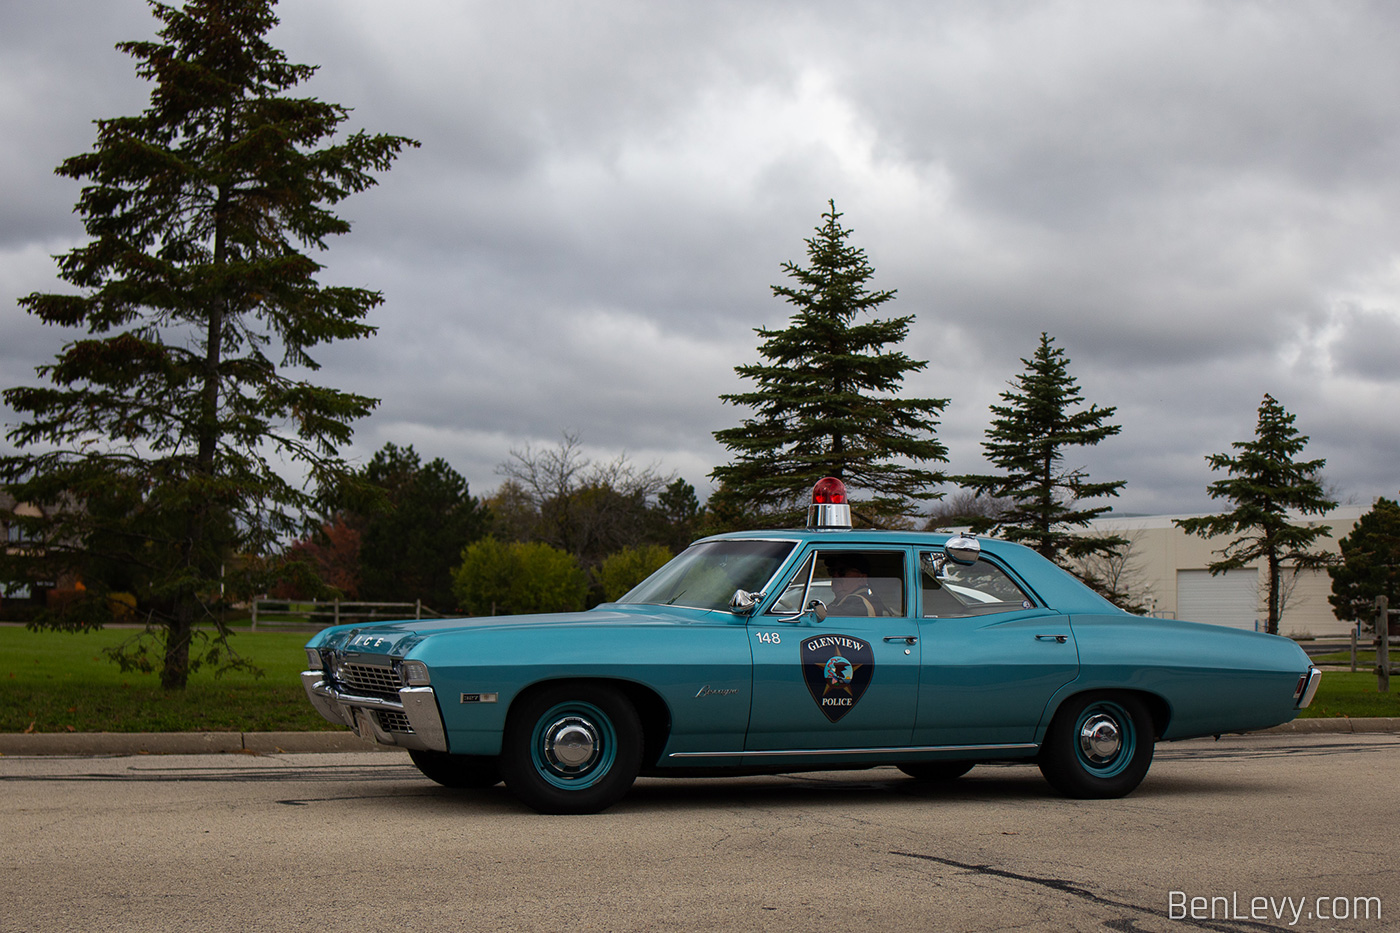 1968 Chevy Biscayne Glenview, IL Police Car